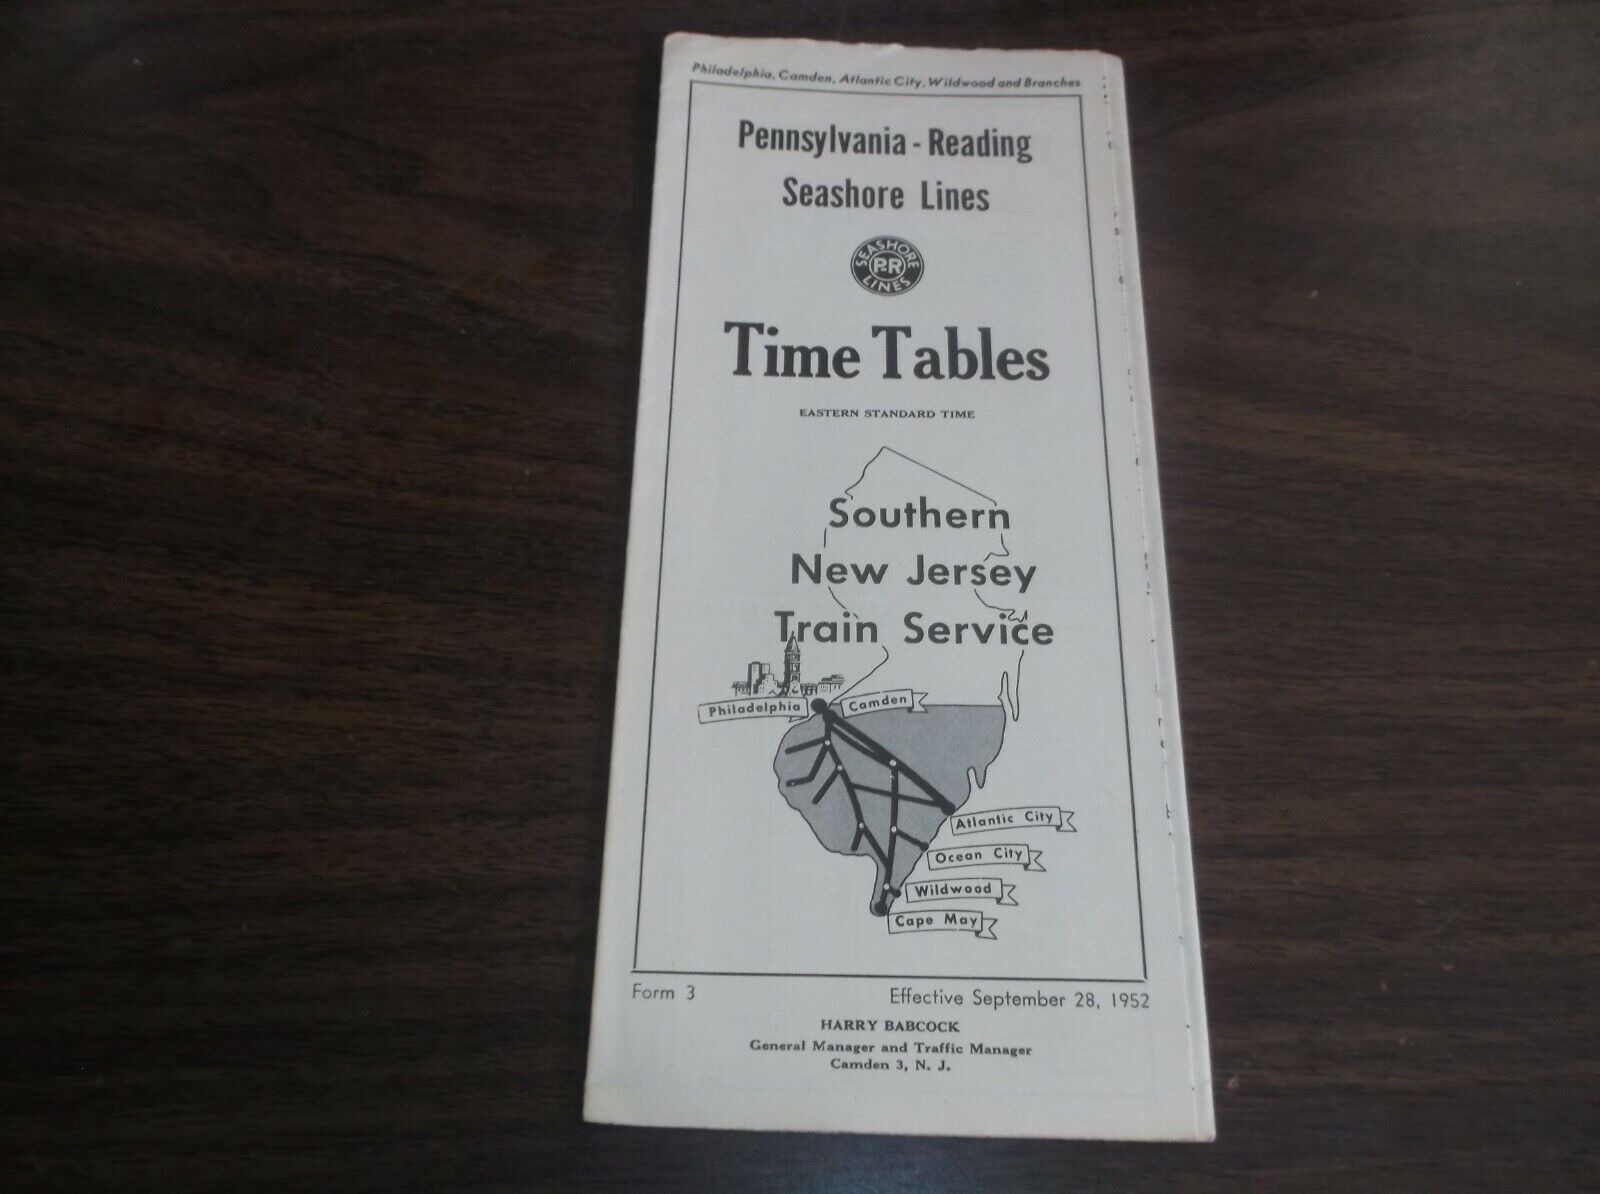 SEPTEMBER 1952 PRSL PENNSYLVANIA READING SEASHORE LINES FORM 3 PUBLIC TIMETABLE